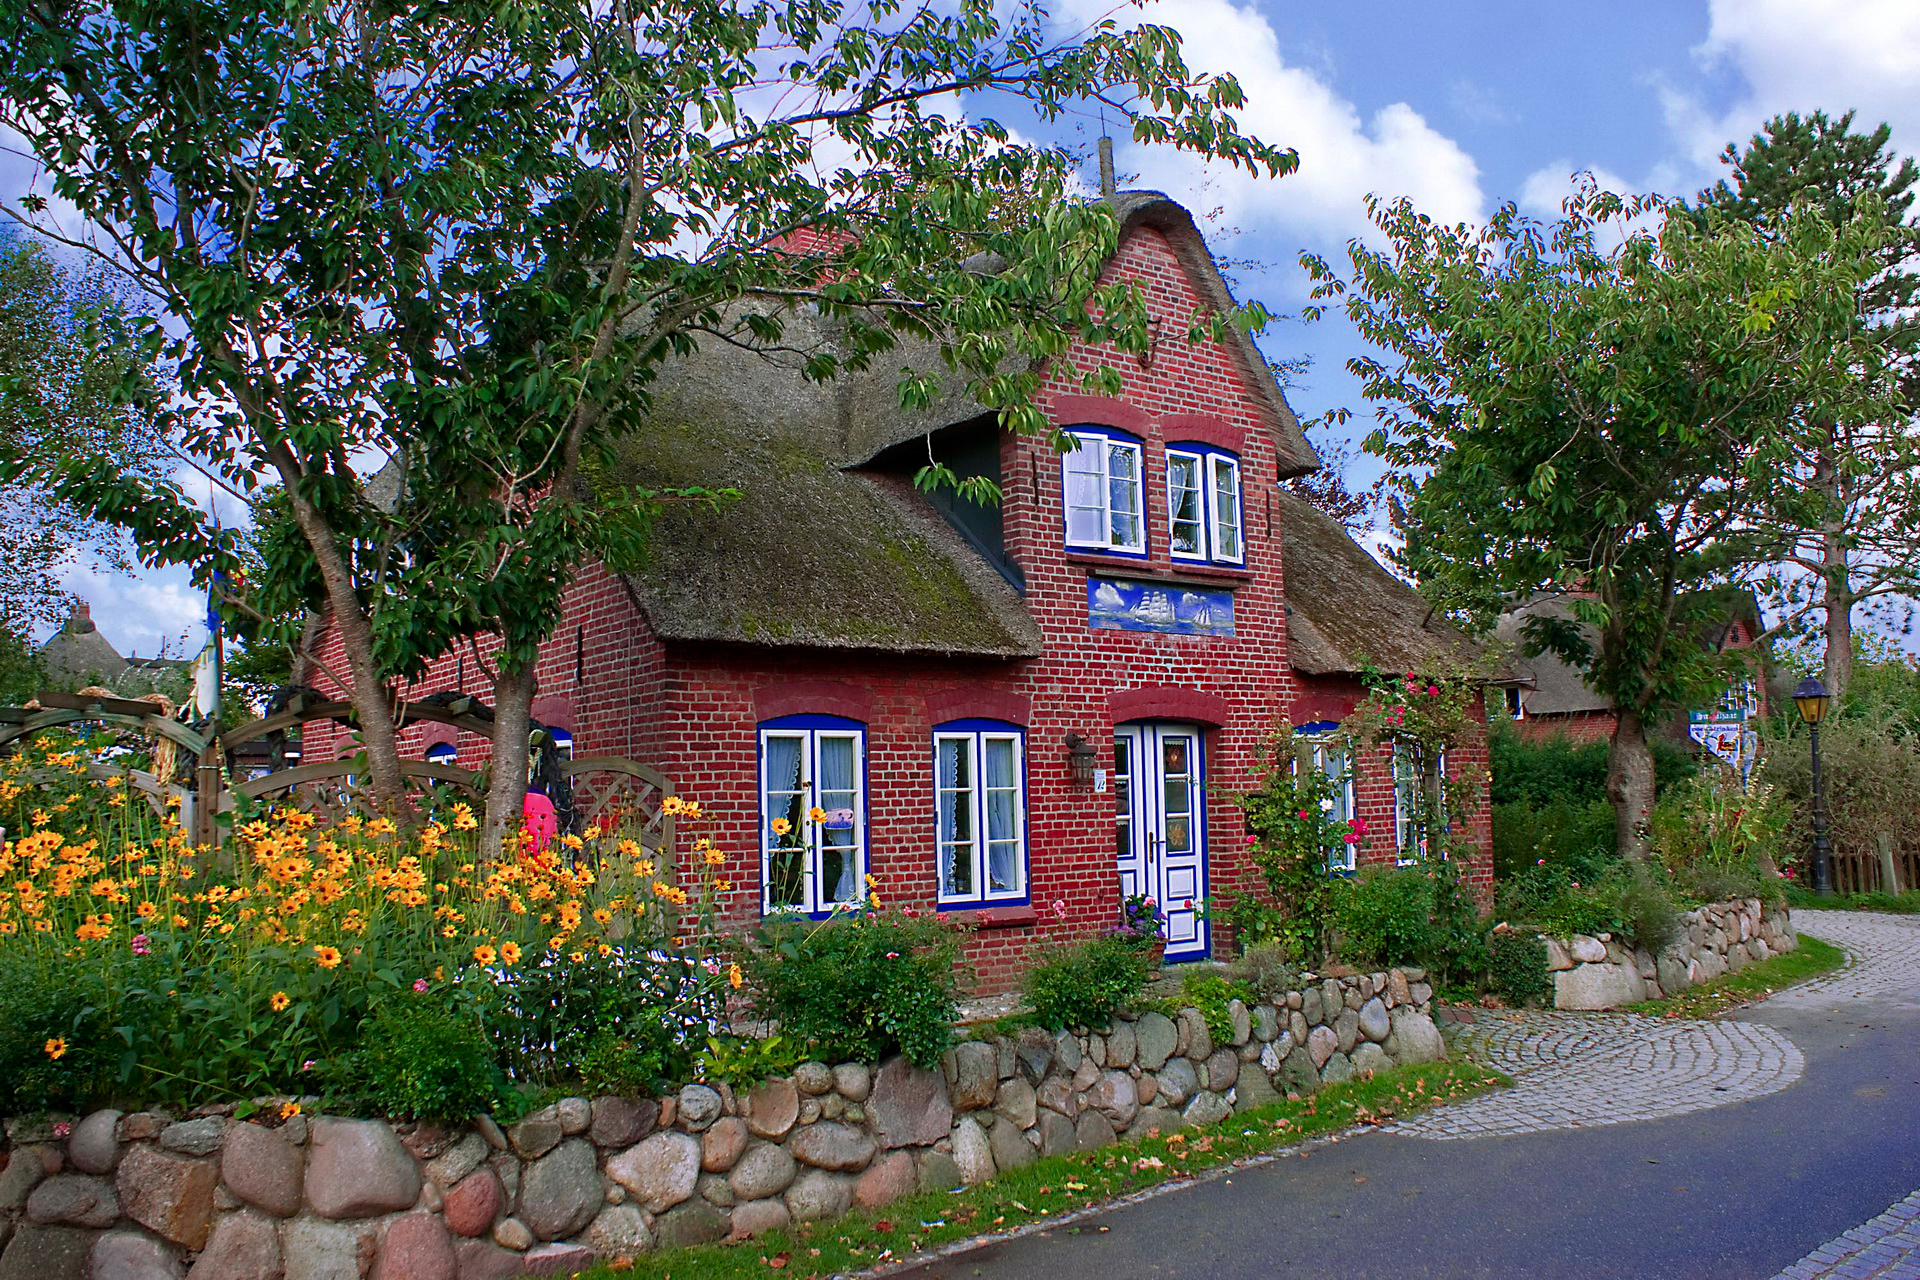 Маленький домик в деревне фото